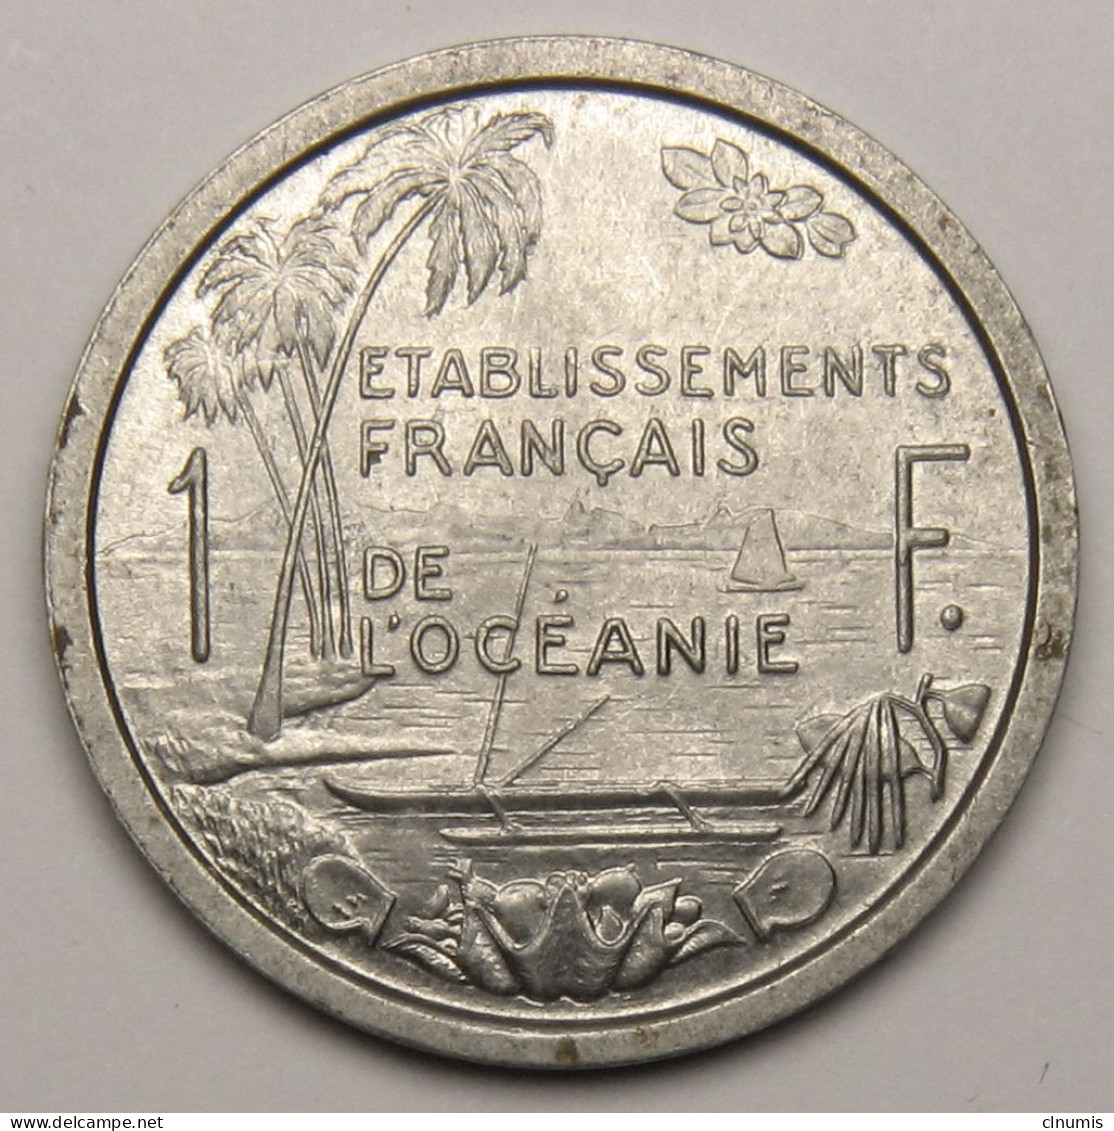 Océanie Française, 1 Franc Union Française, 1949 - French Polynesia